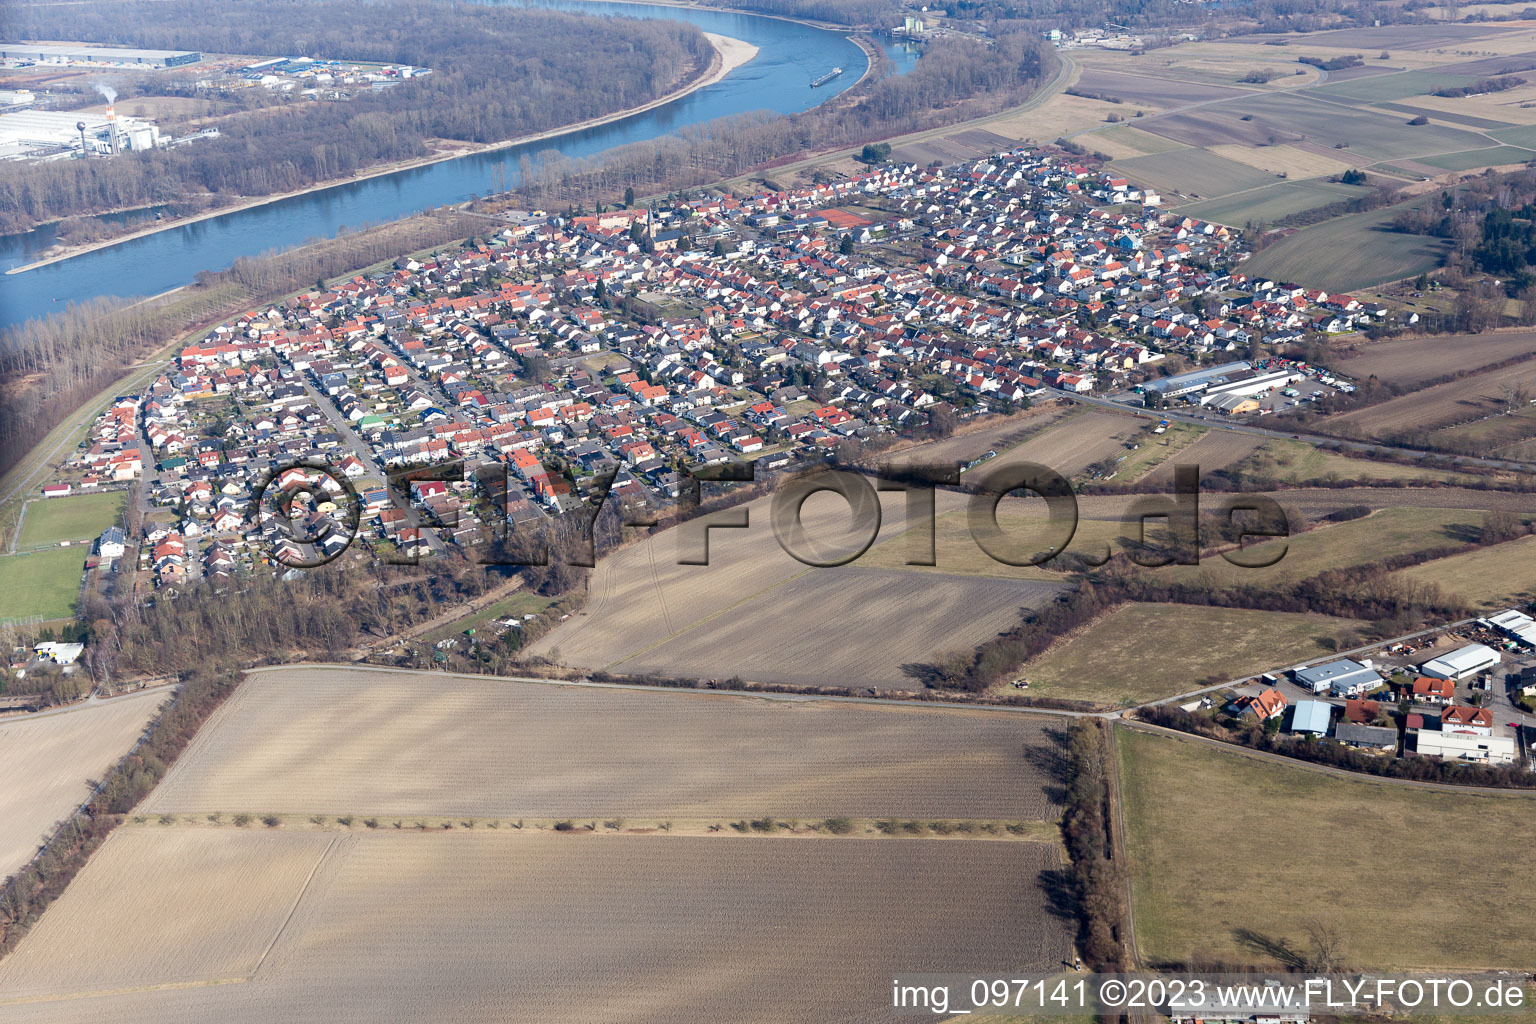 Aerial photograpy of District Rheinhausen in Oberhausen-Rheinhausen in the state Baden-Wuerttemberg, Germany